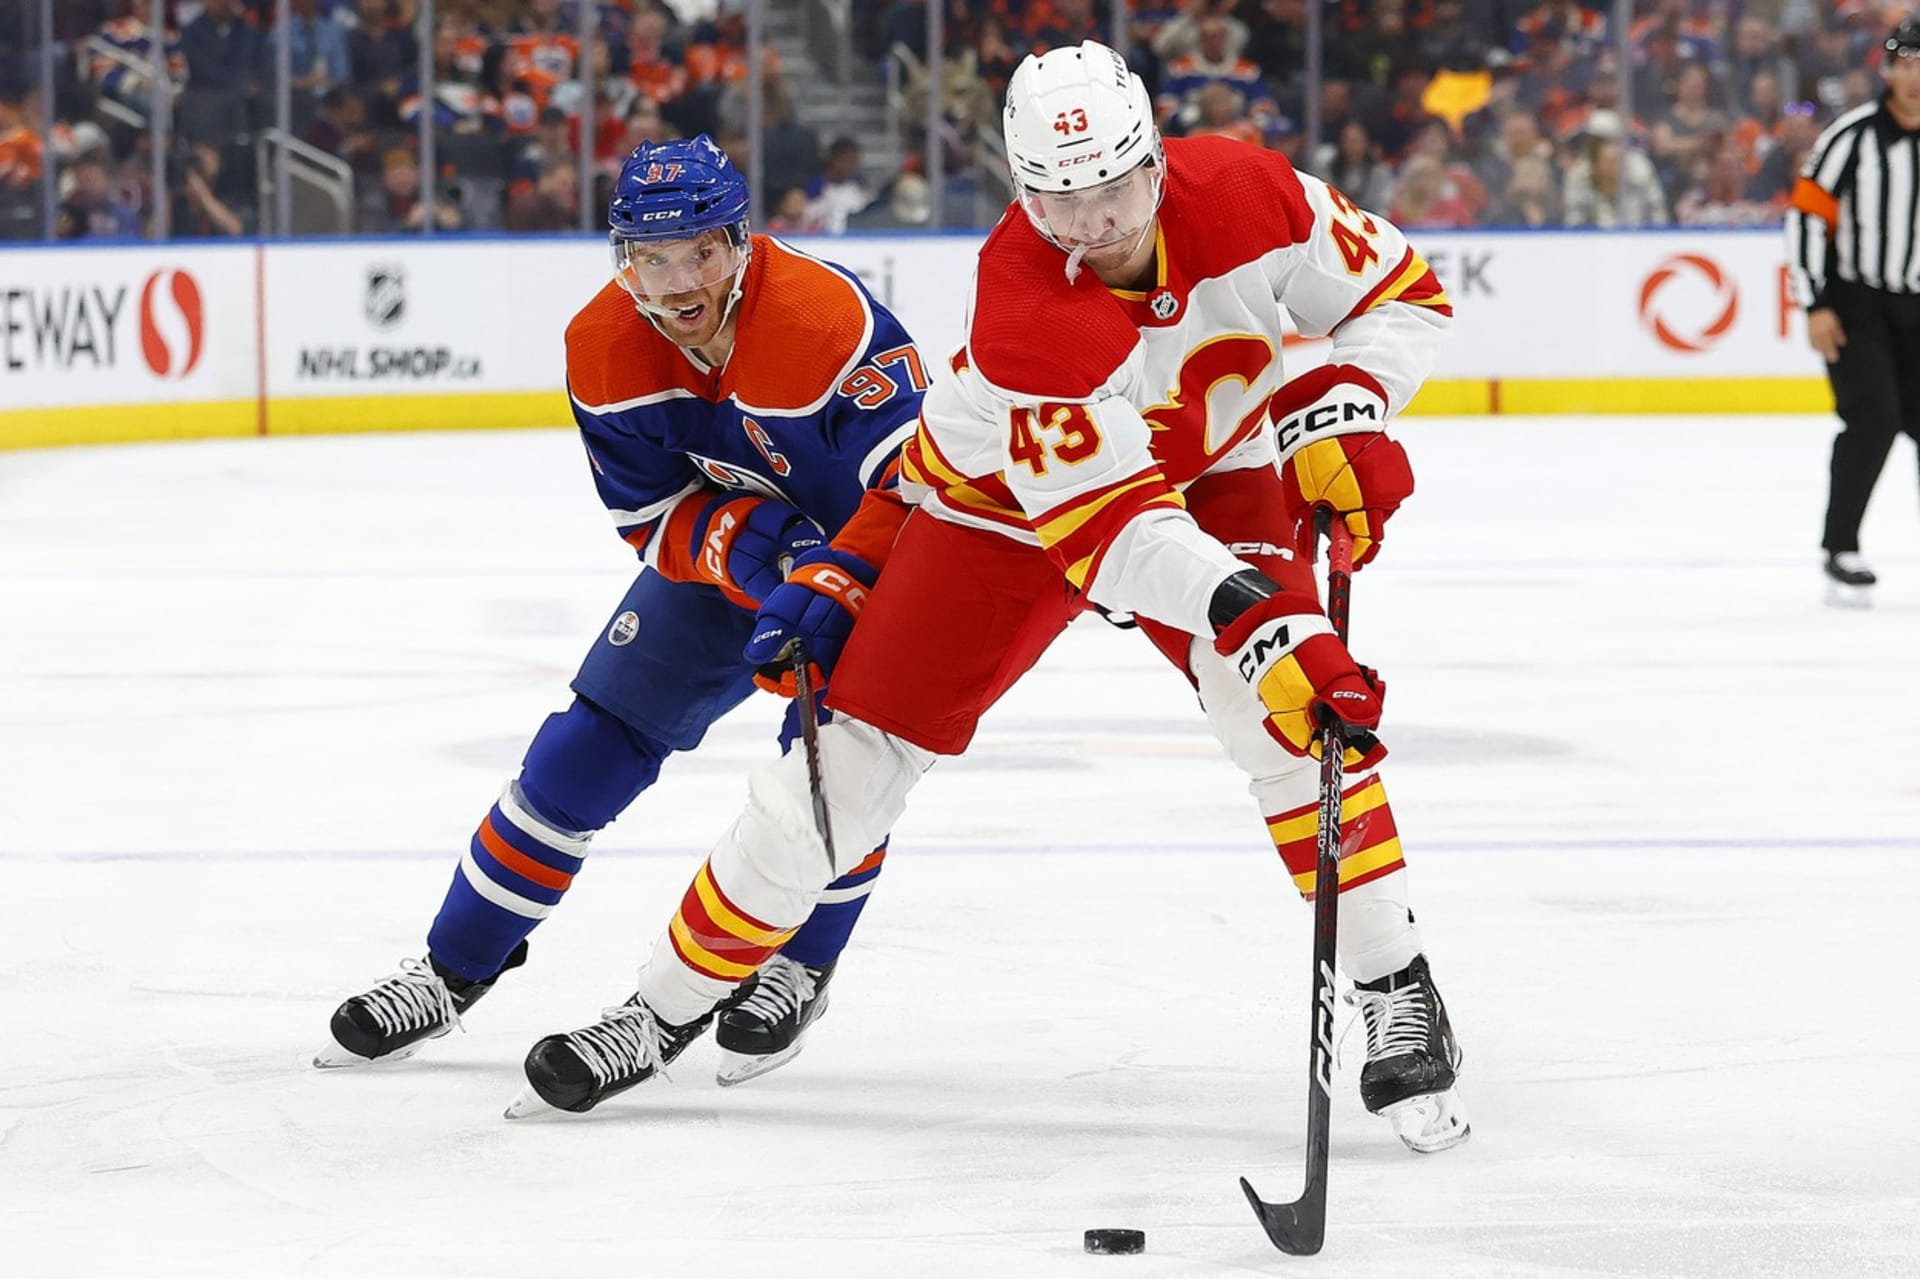 Hokejista Adam Klapka si odbyl debut v NHL v dresu Calgary Flames (na fotografii během přípravného zápasu v říjnu 2023).  